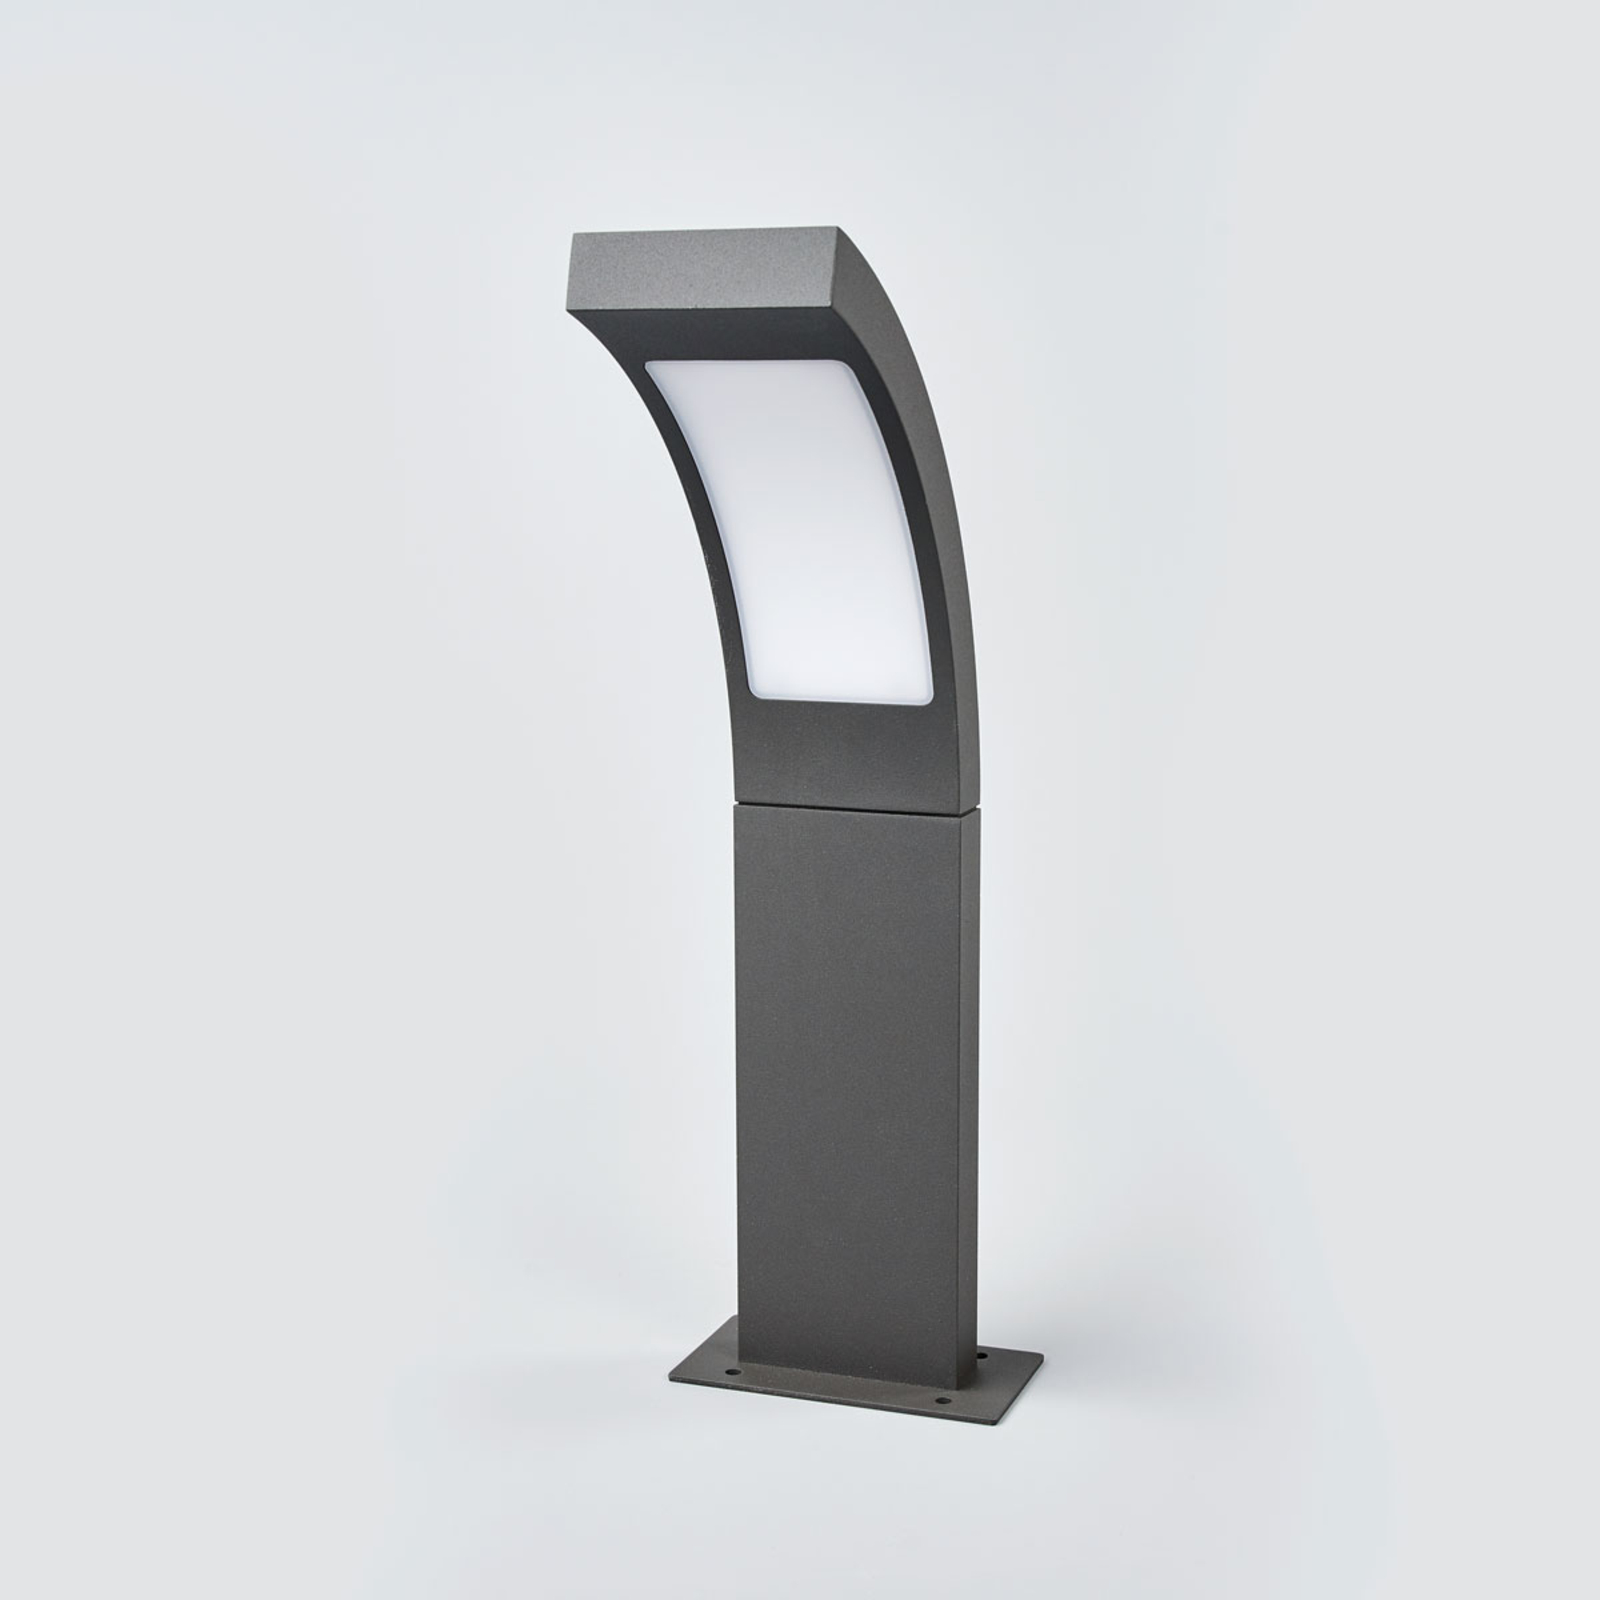 Juvia modern LED pillar light in graphite grey